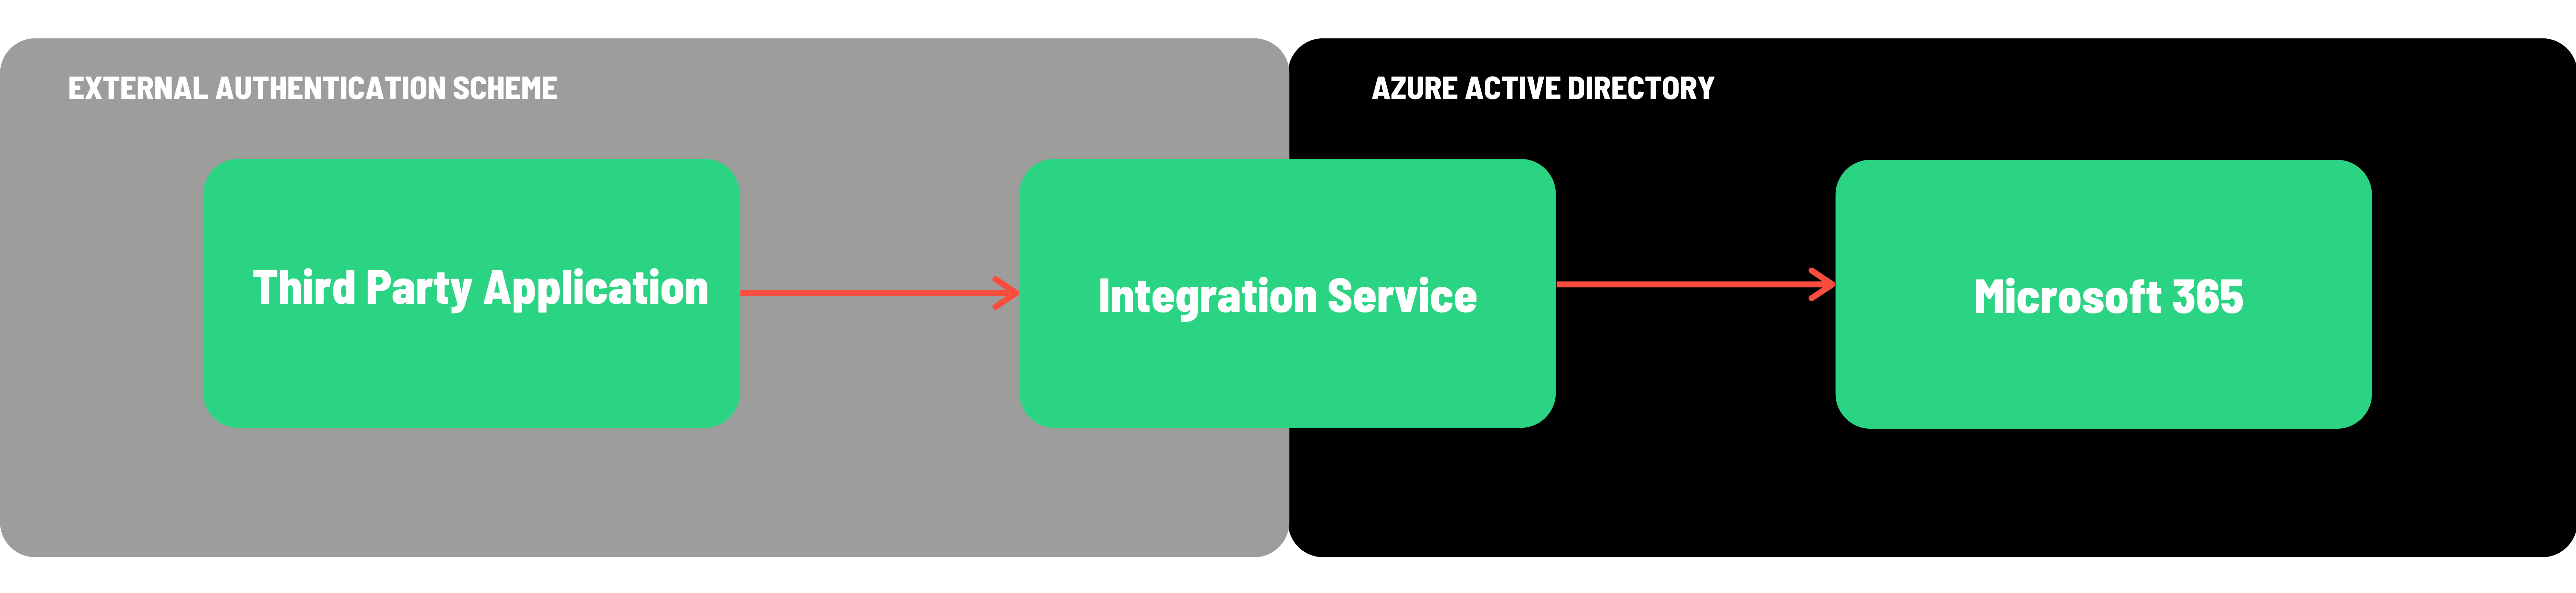 External Authentication Scheme and Azure Active Directory graph